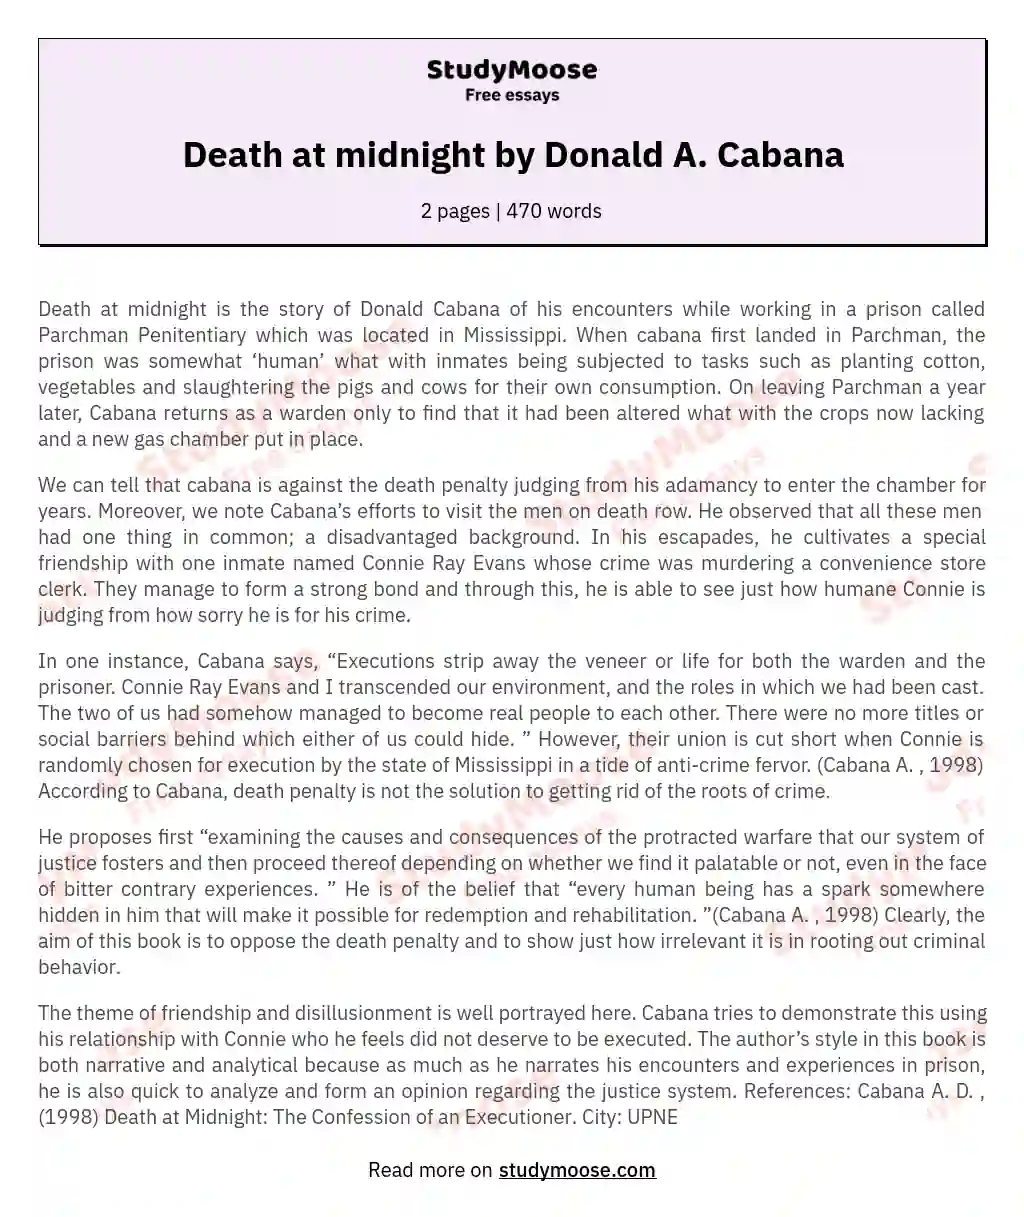 Death at midnight by Donald A. Cabana essay